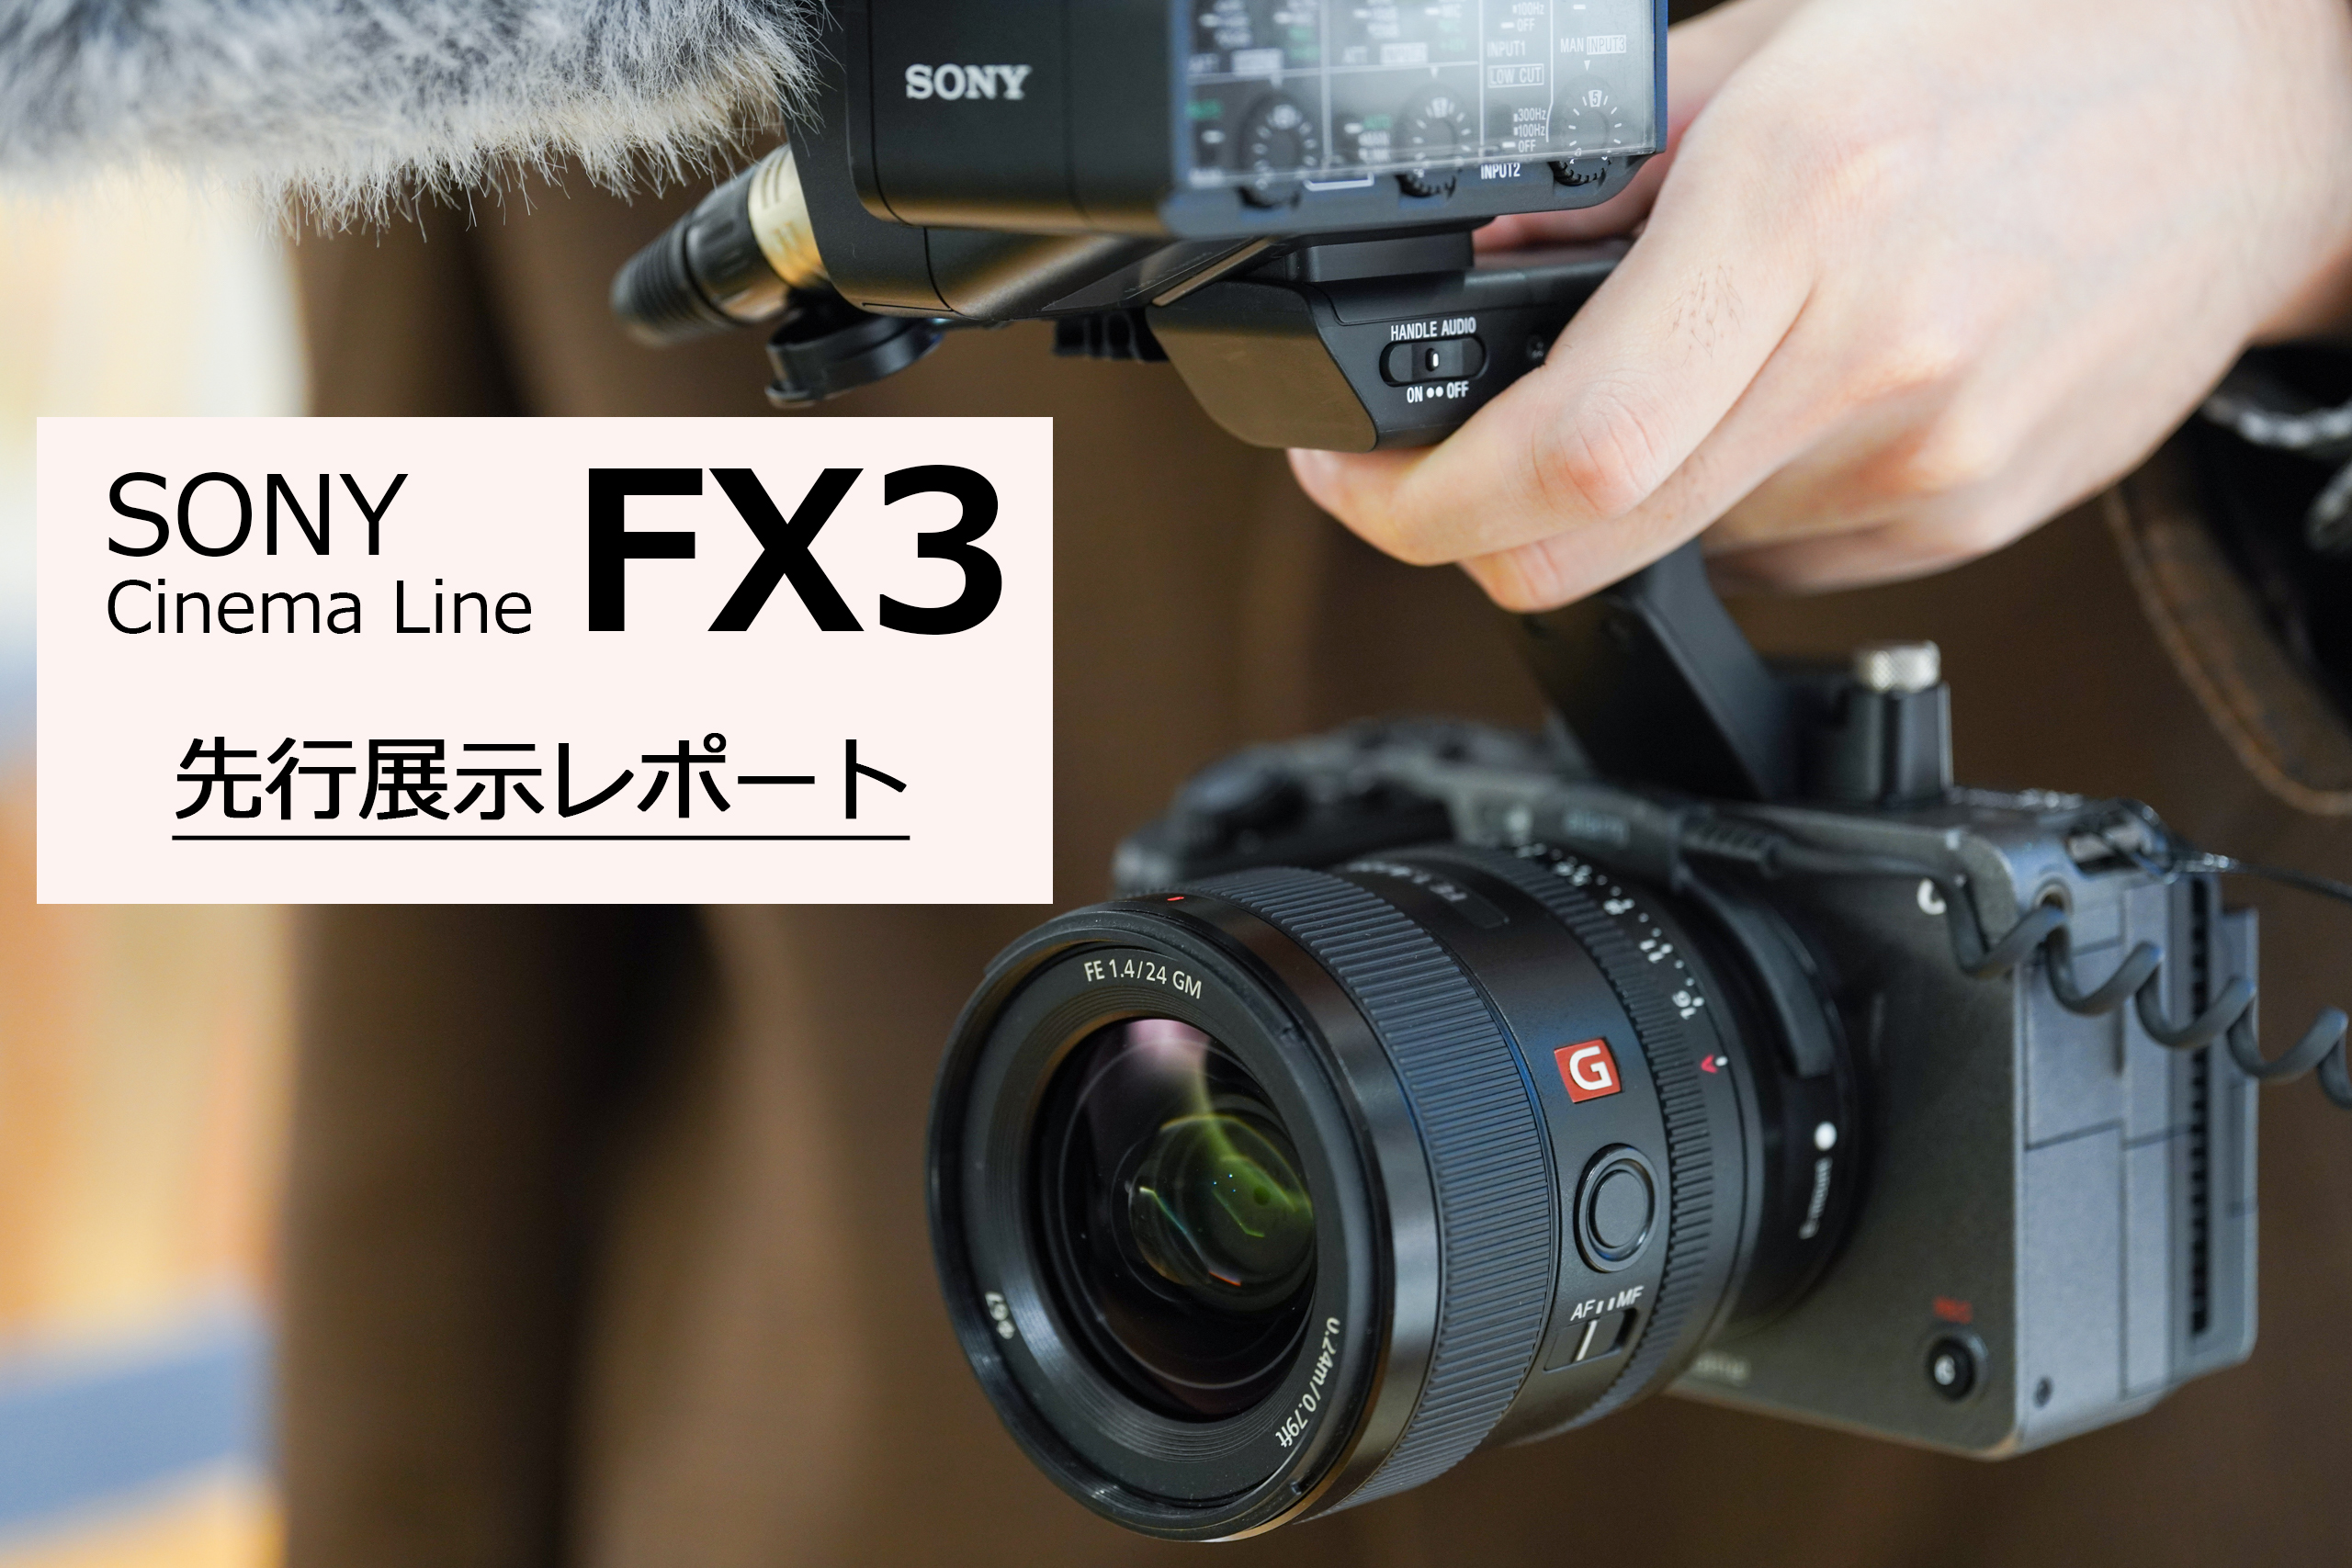 SONY】CinemaLineカメラ『FX3』 先行展示レポート | THE MAP TIMES